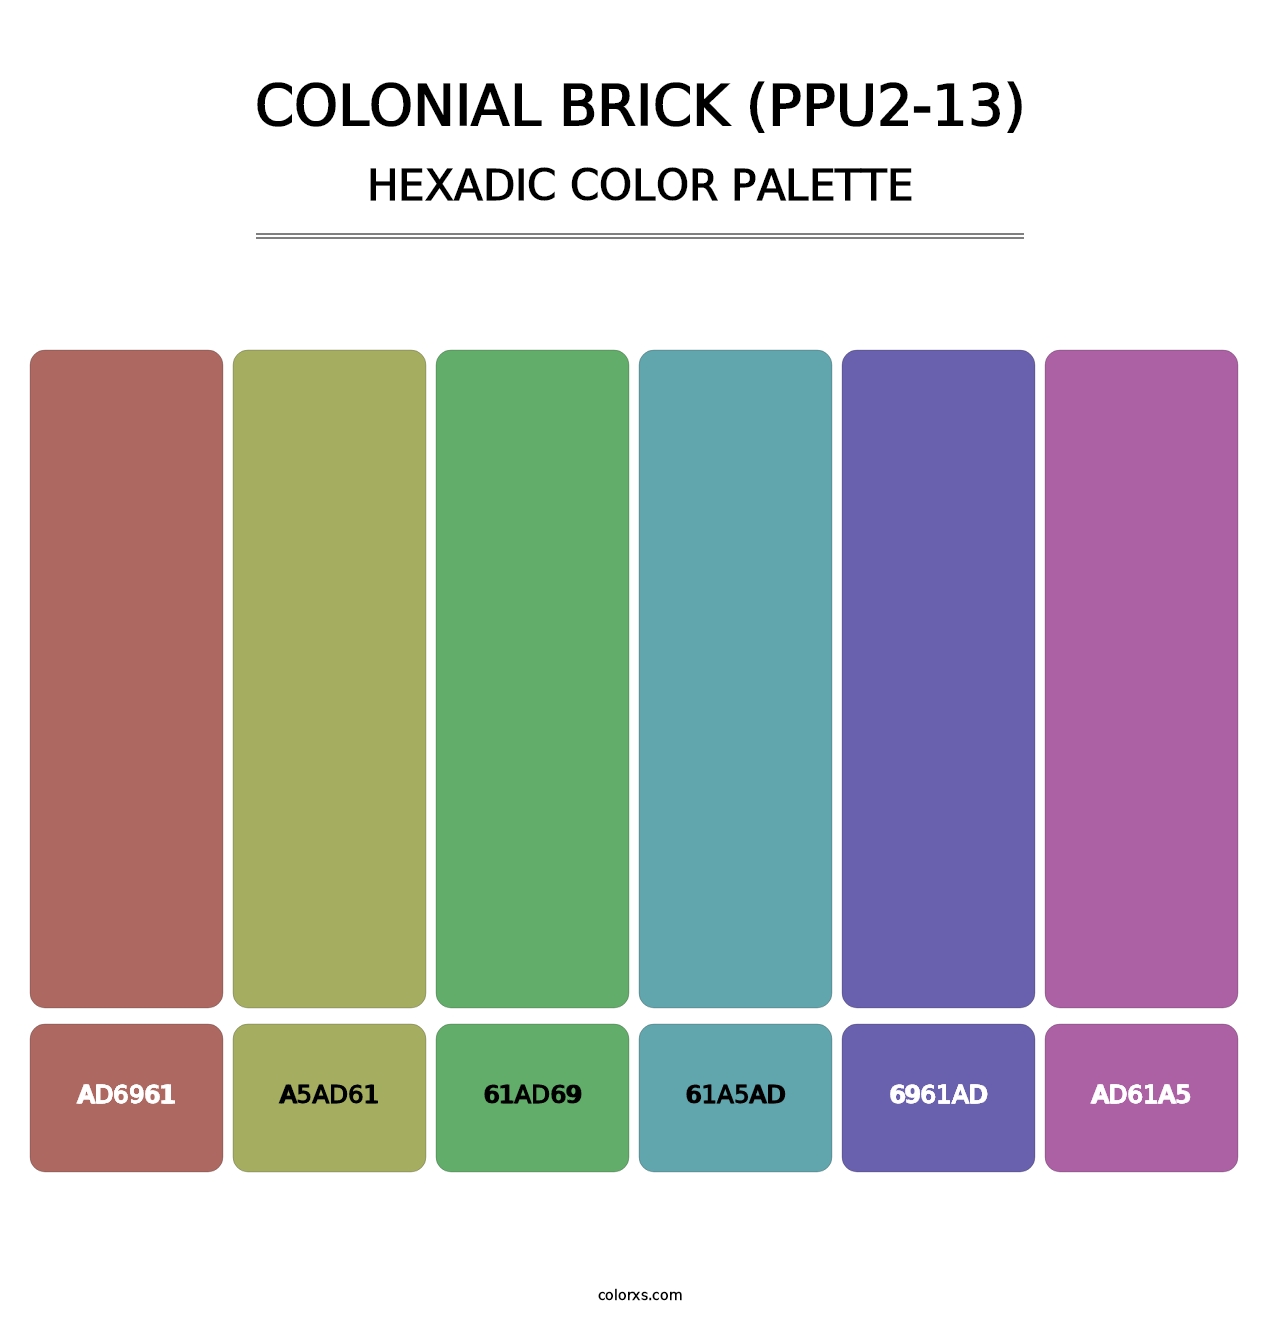 Colonial Brick (PPU2-13) - Hexadic Color Palette